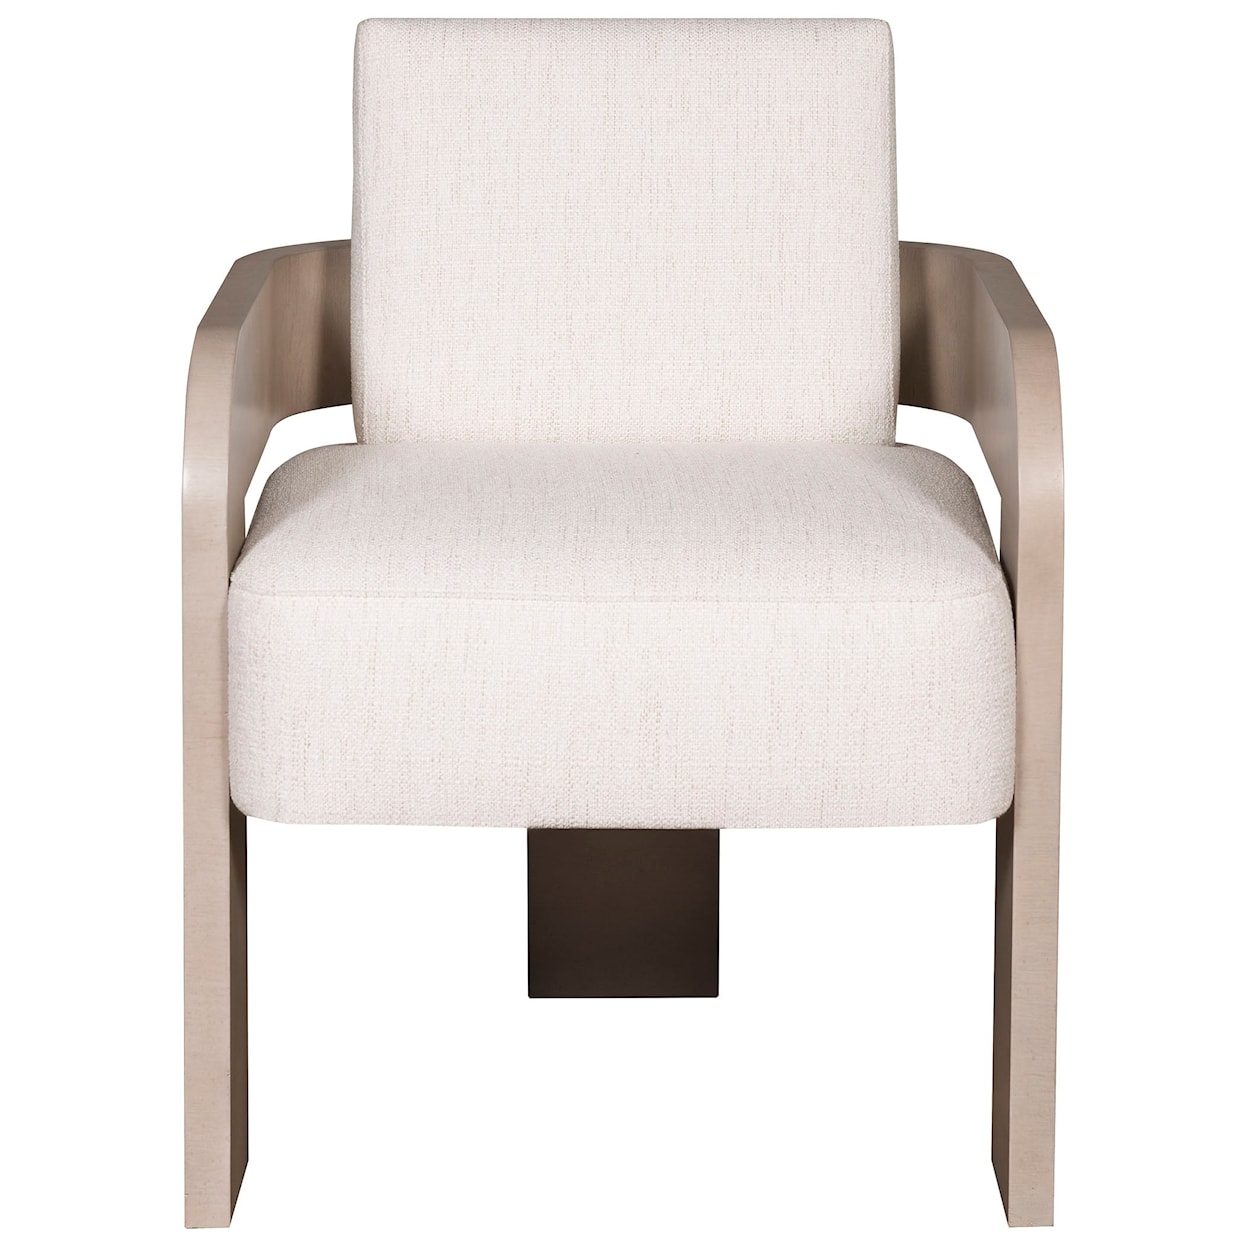 Vanguard Furniture Form Arm Chair